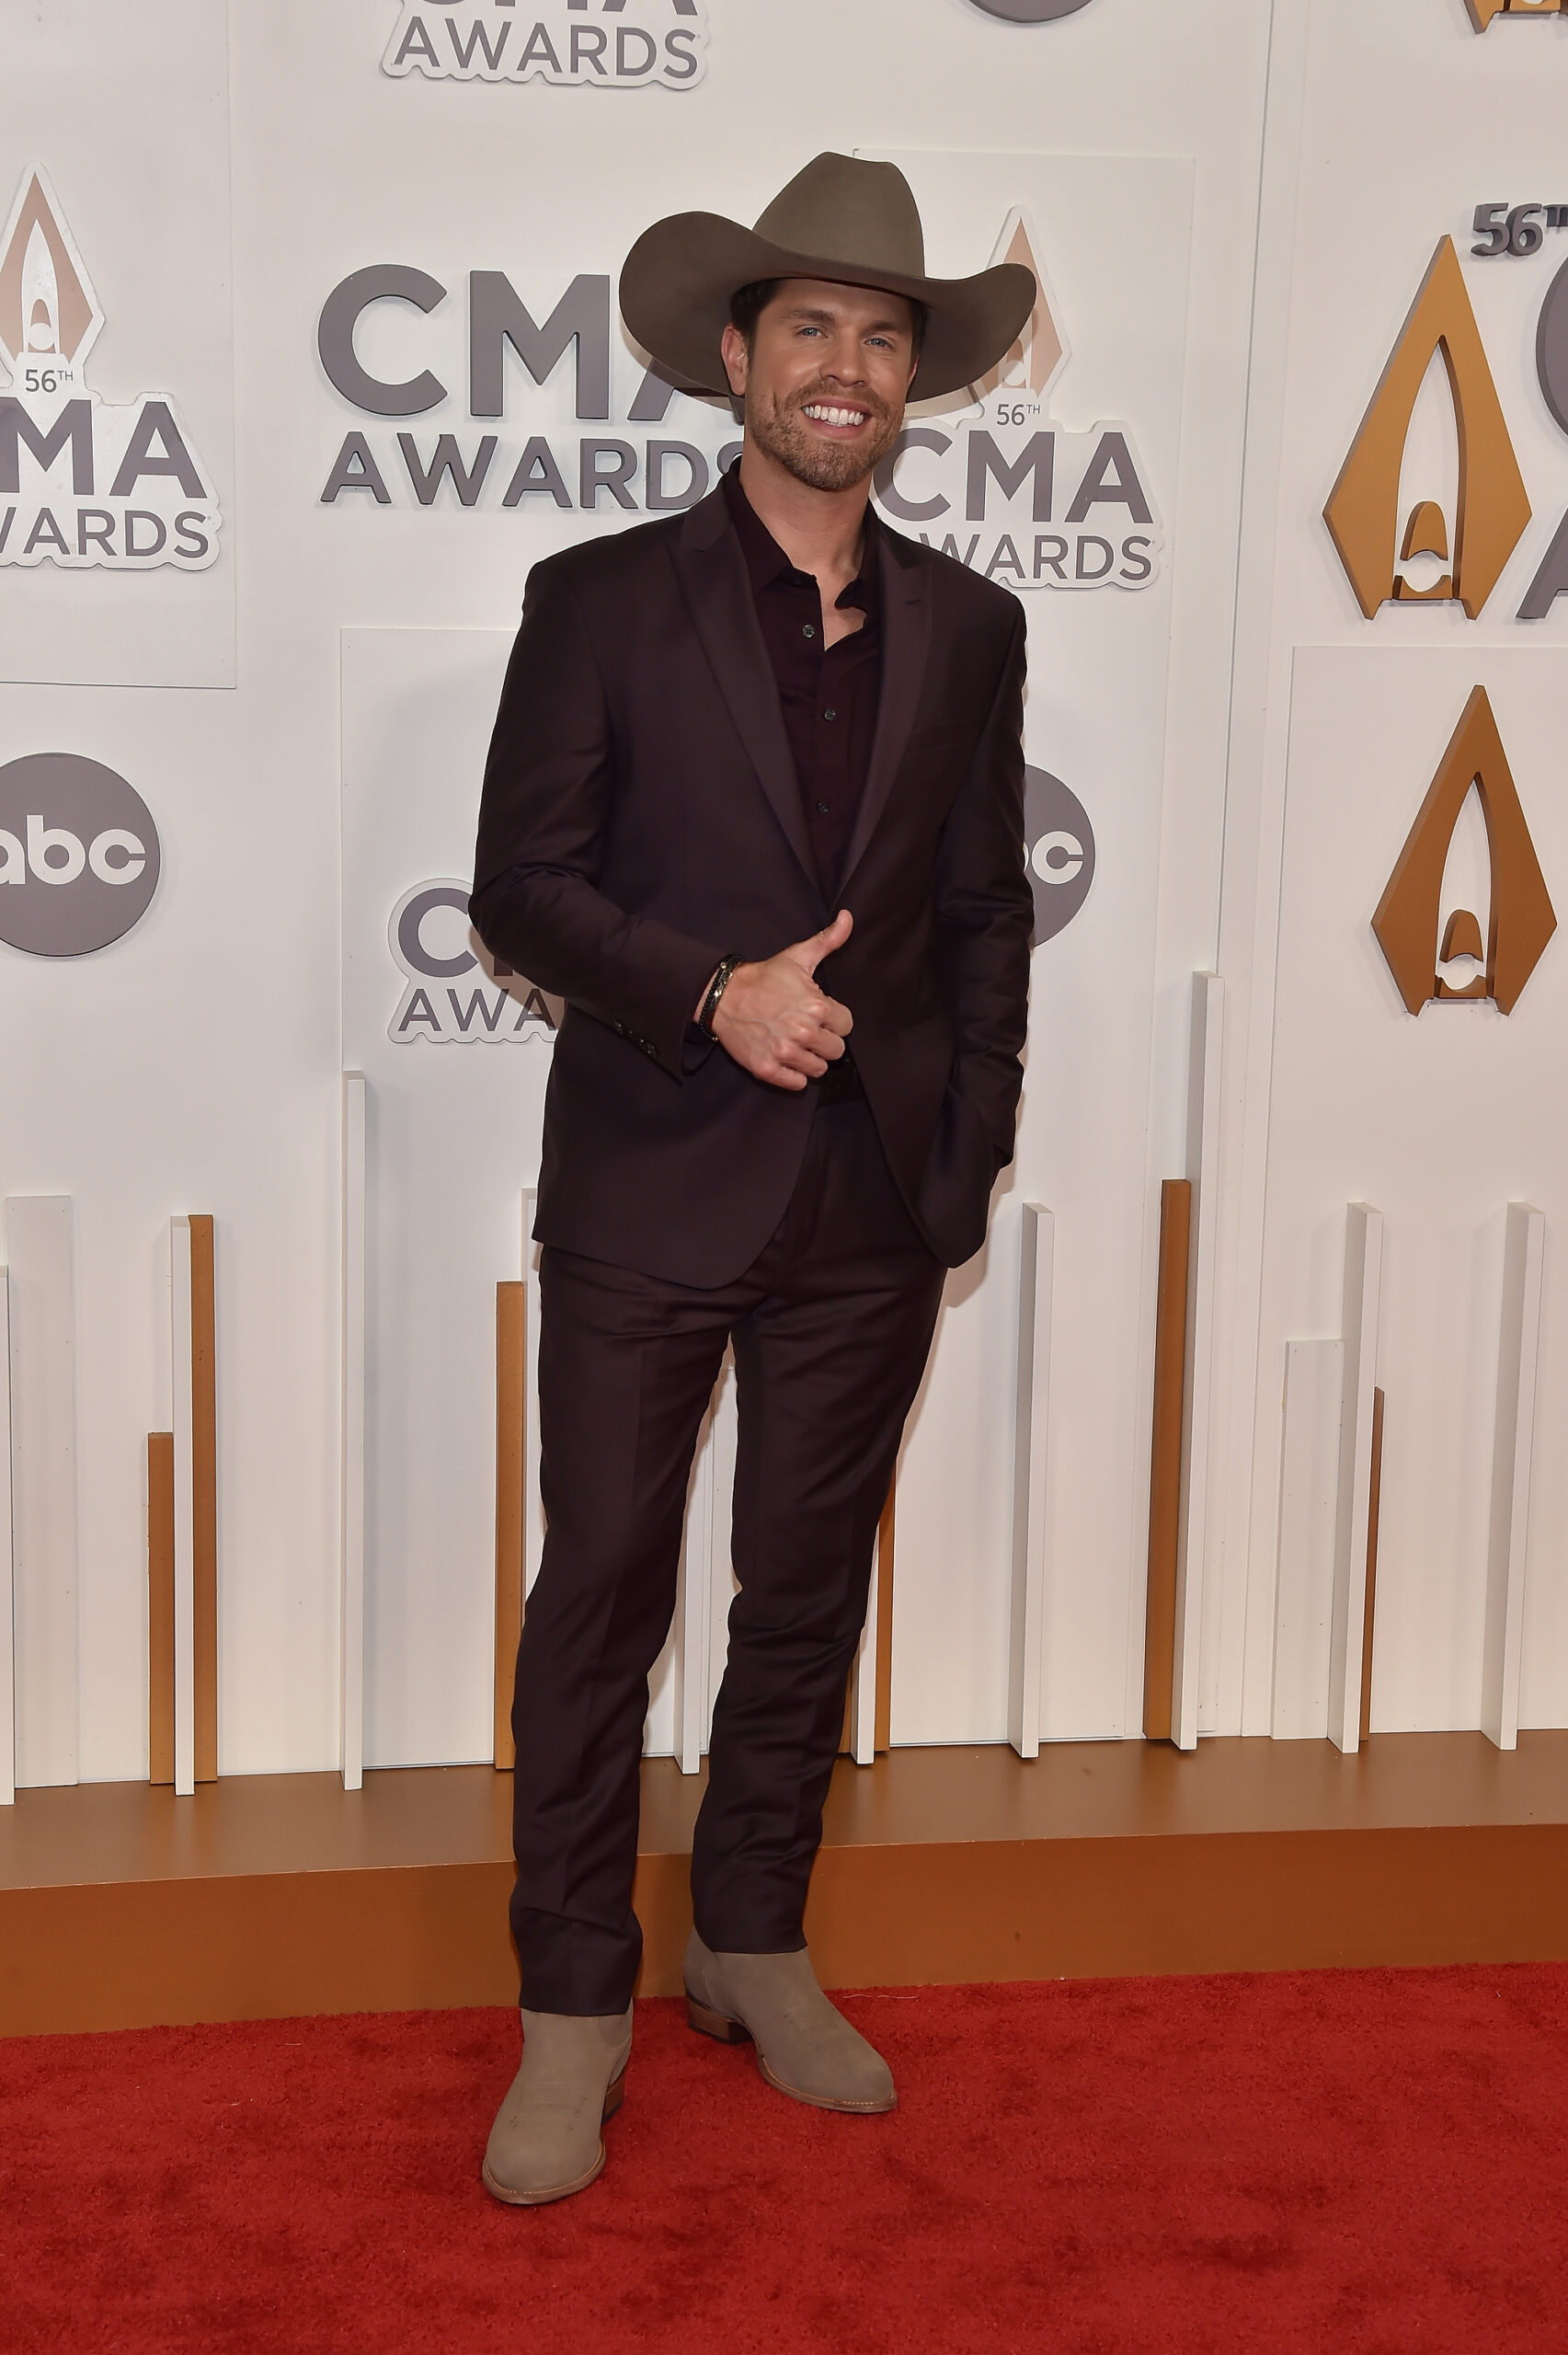 CMA Country Music Awards 2022 Red Carpet (Photos) TVMusic Network